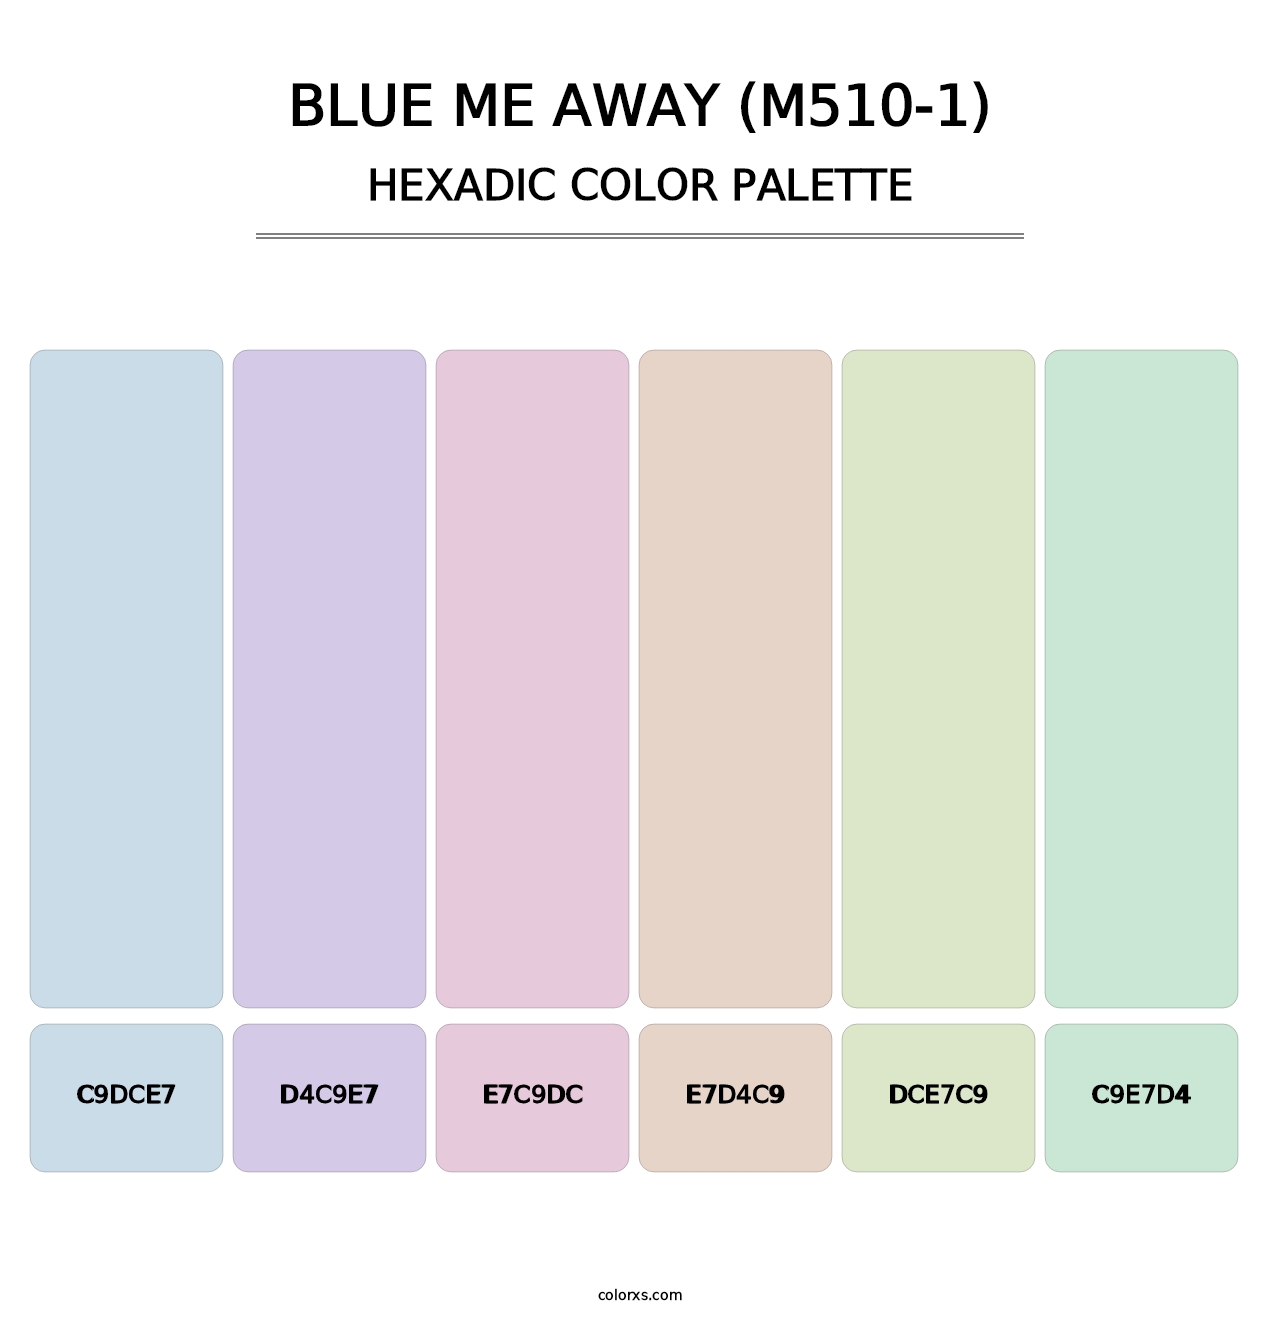 Blue Me Away (M510-1) - Hexadic Color Palette